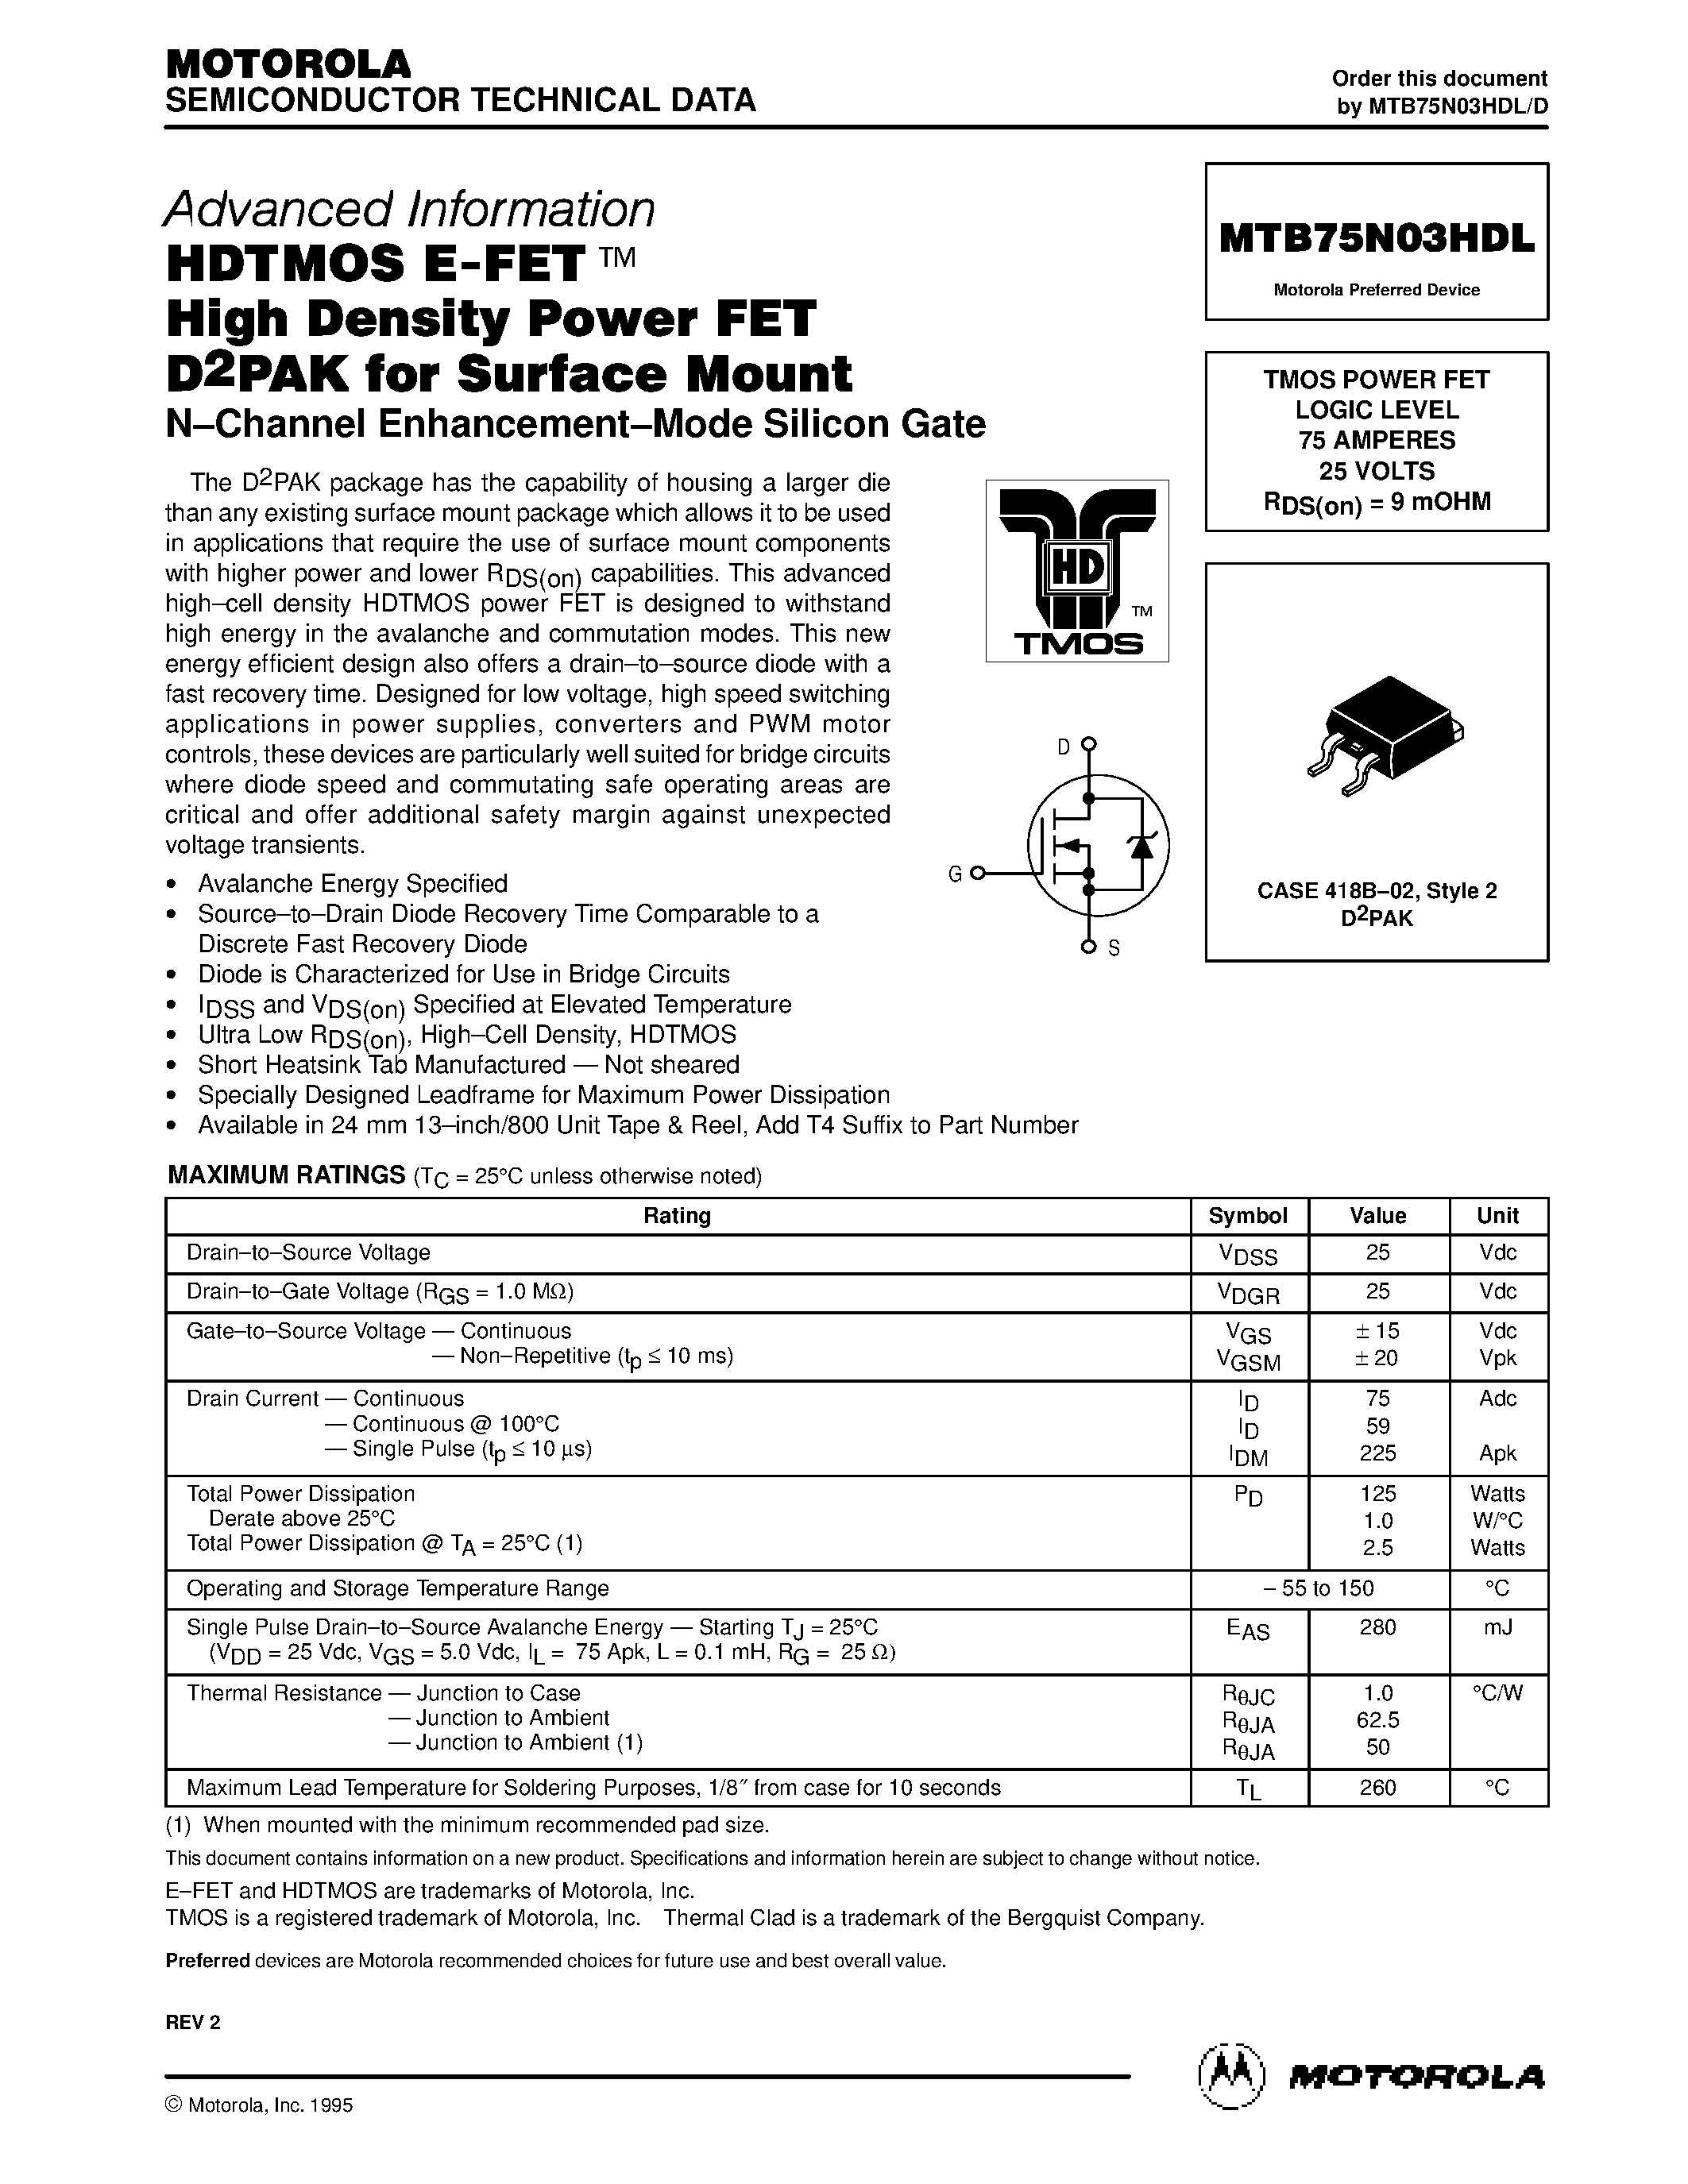 Datasheet MTB75N03HDL - TMOS POWER FET LOGIC LEVEL 75 AMPERES 25 VOLTS page 1